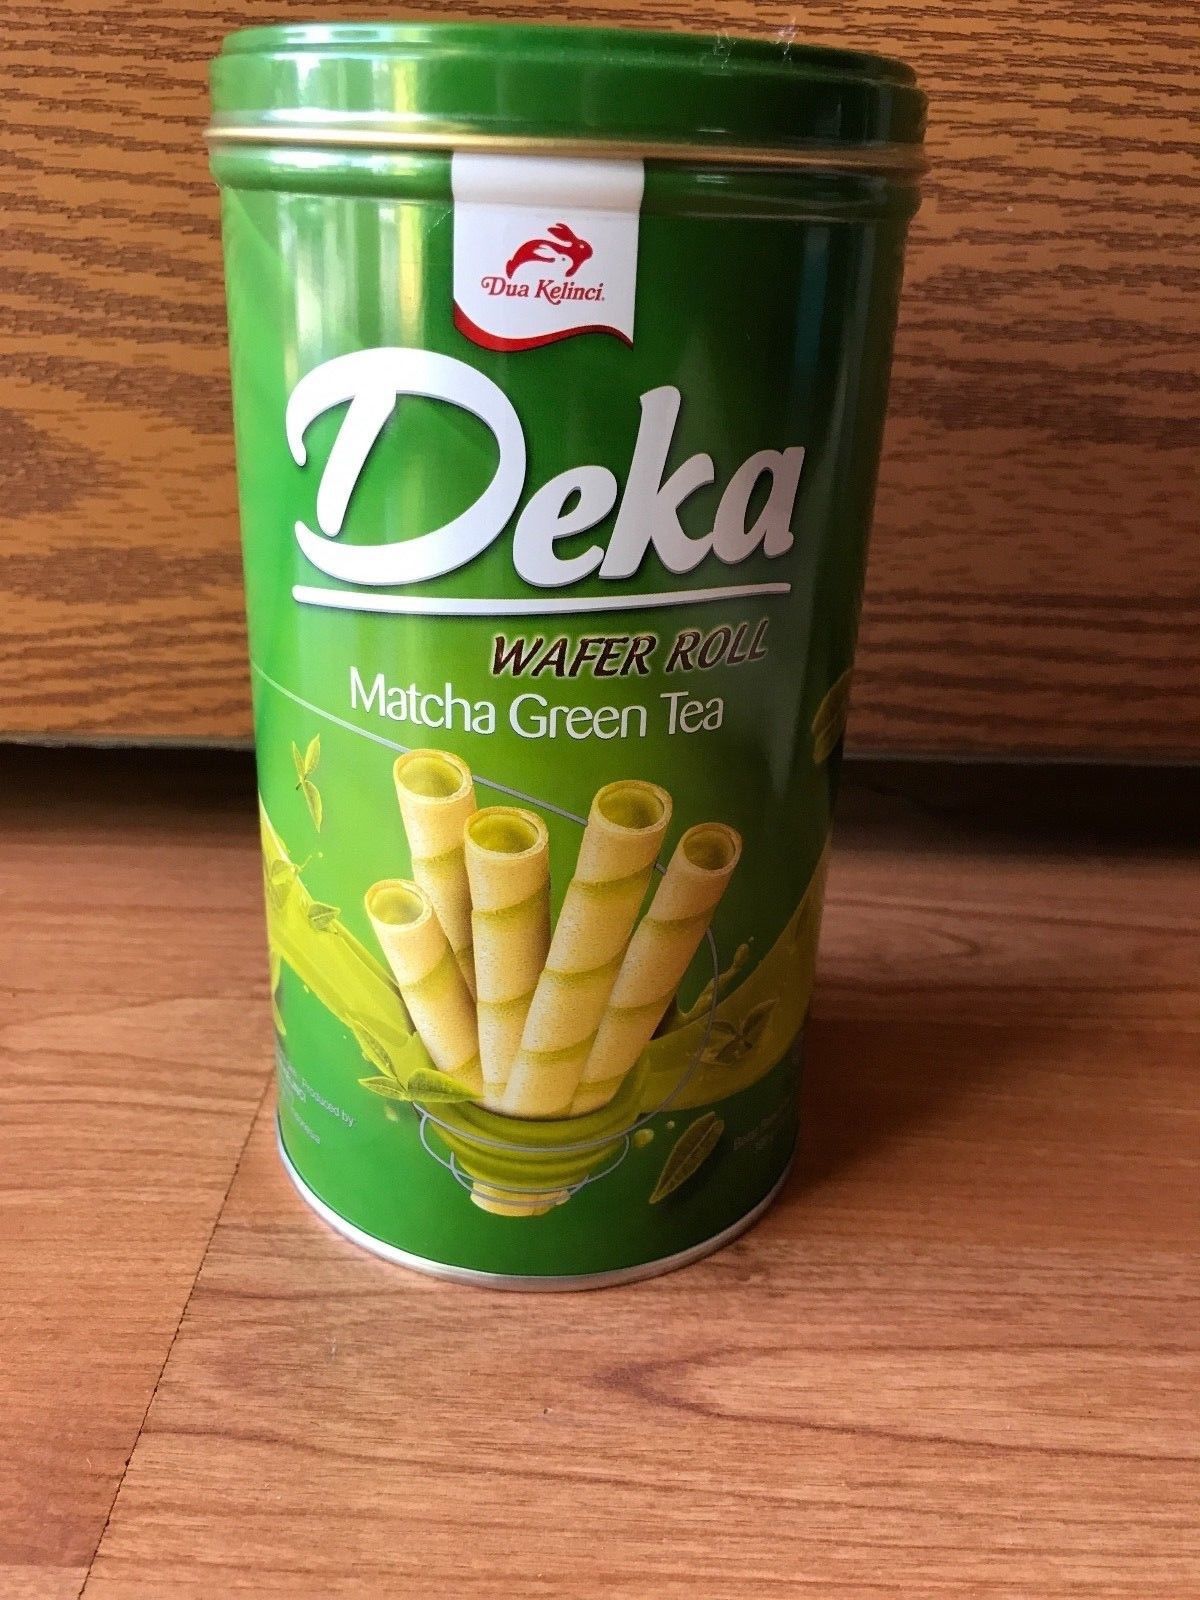 6pcs DEKA Matcha Green Tea Wafer Roll 300g NEW IN BOX